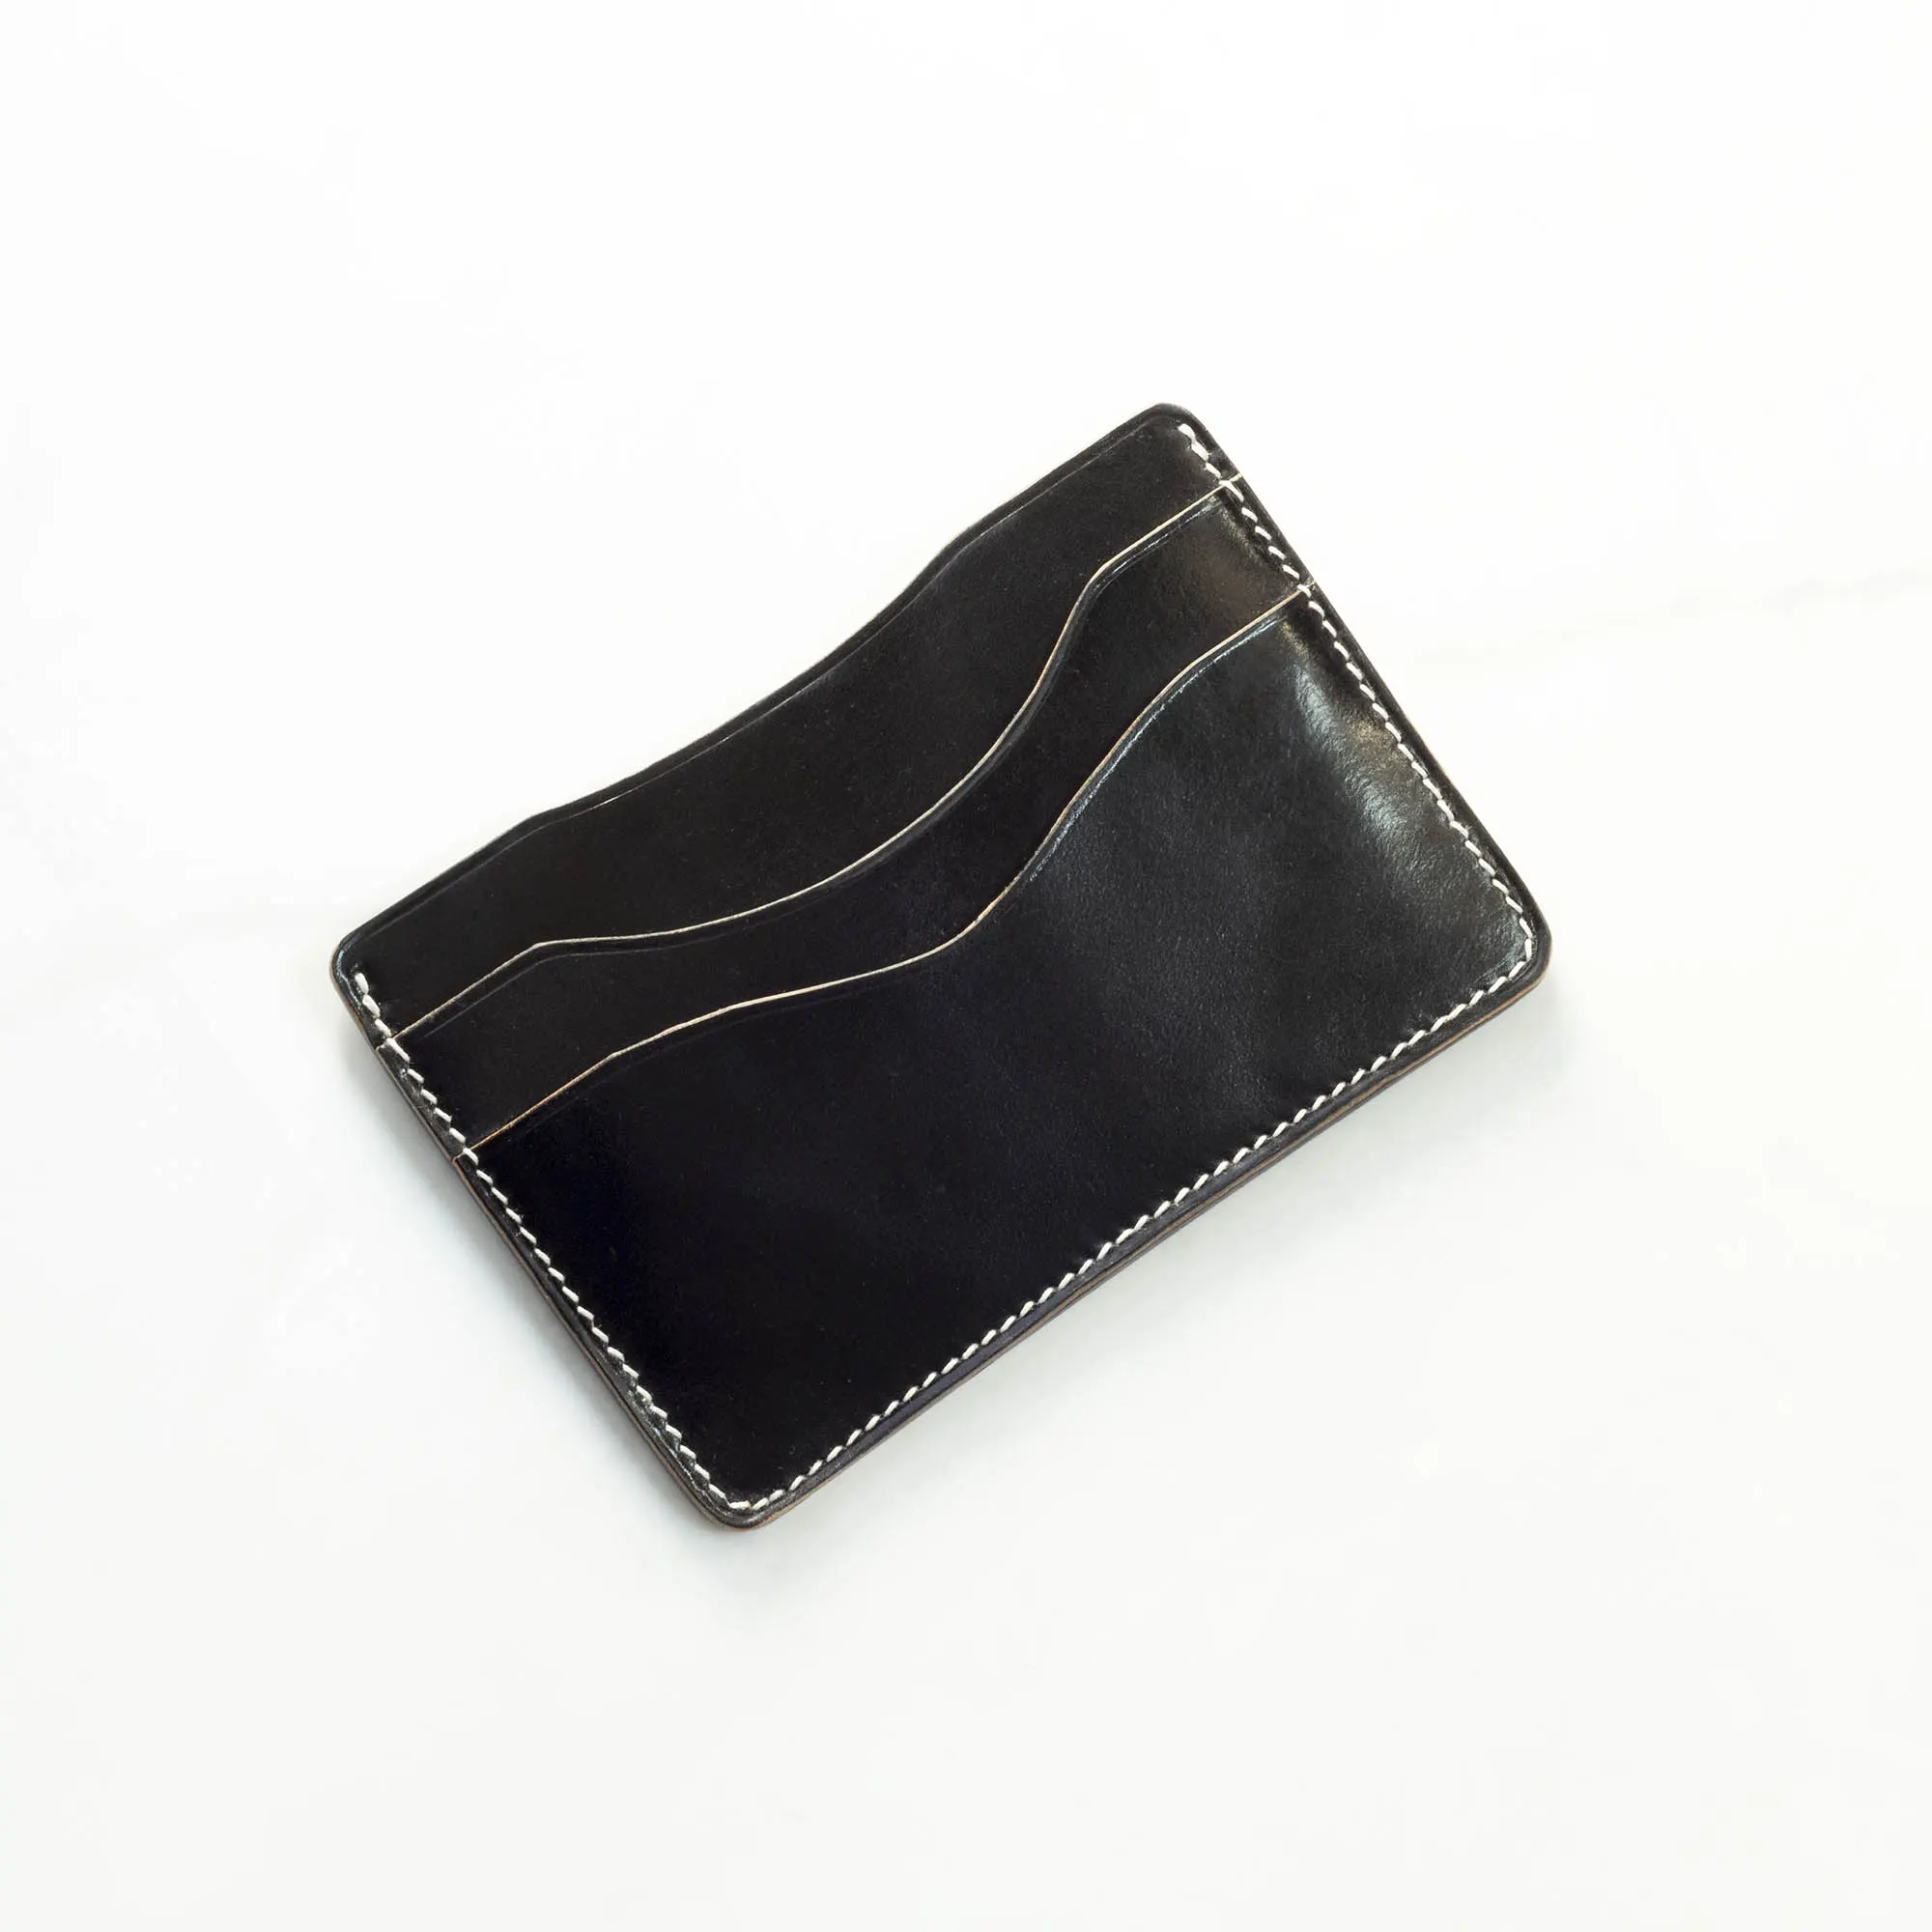 Handmade possala designs black card wallet